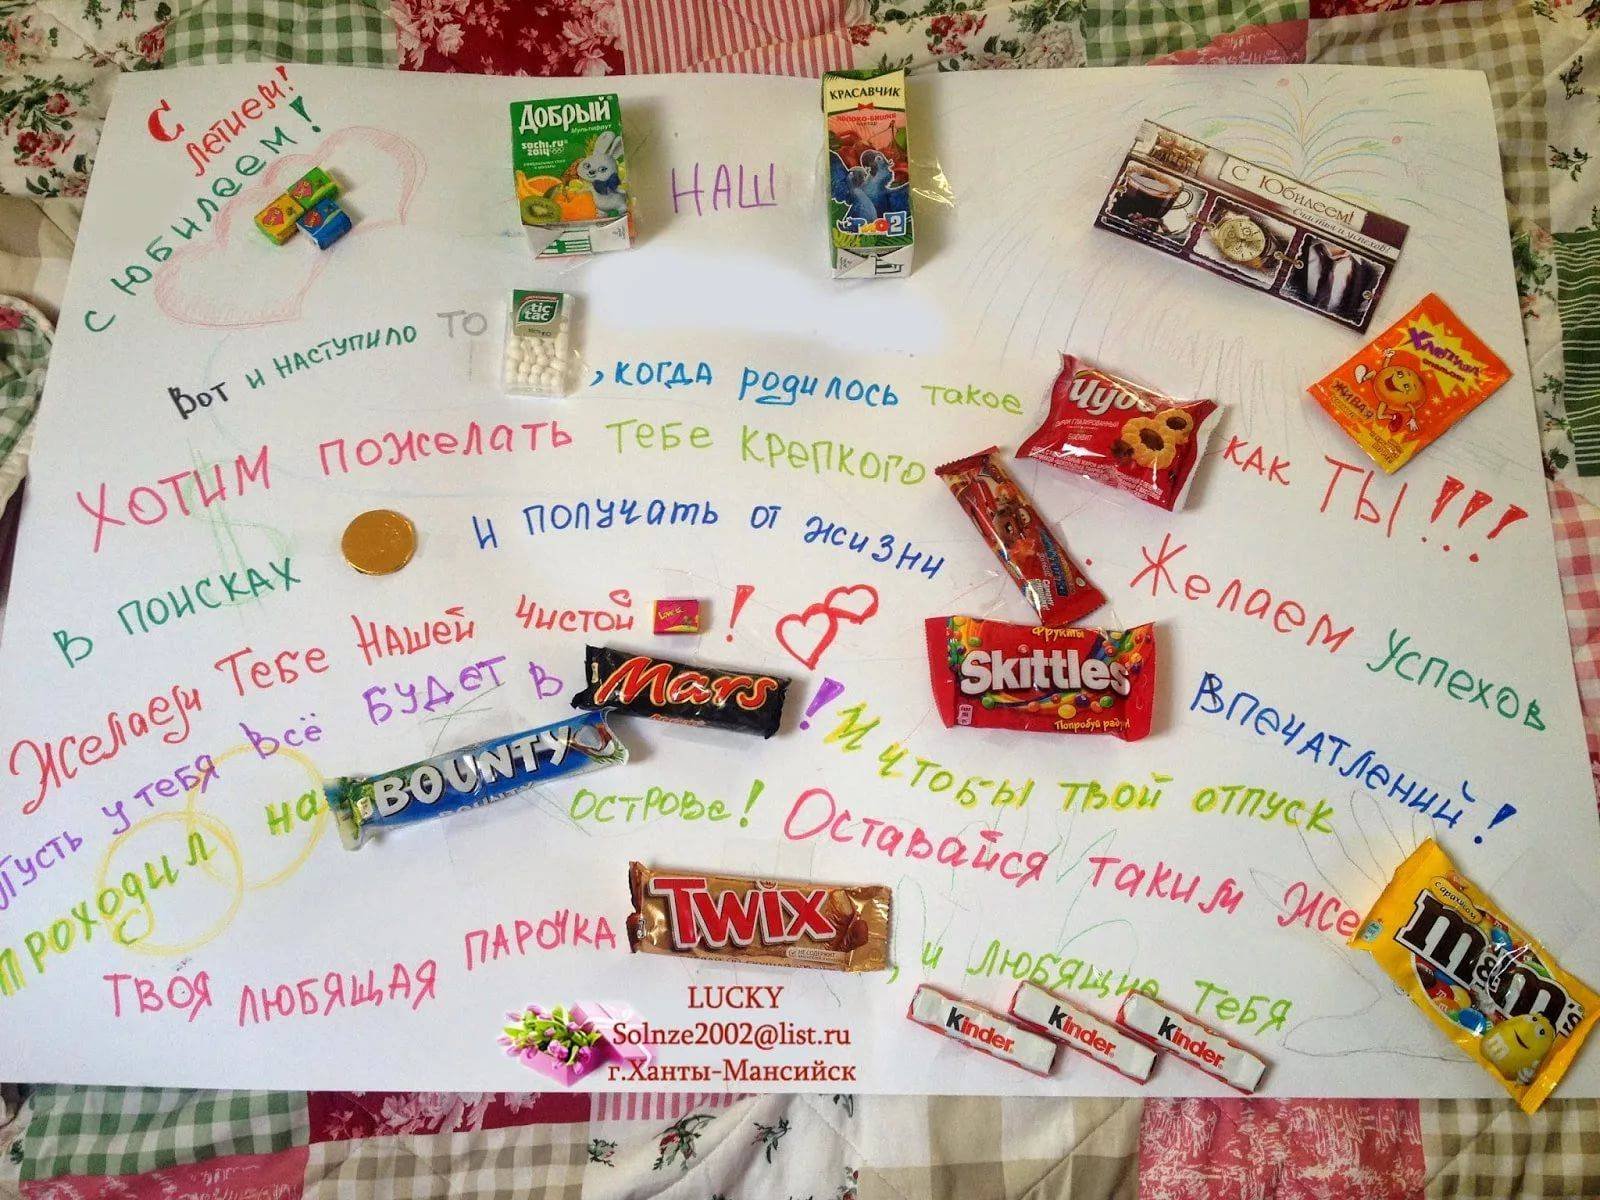 Плакат для любимого №8 со сладостями